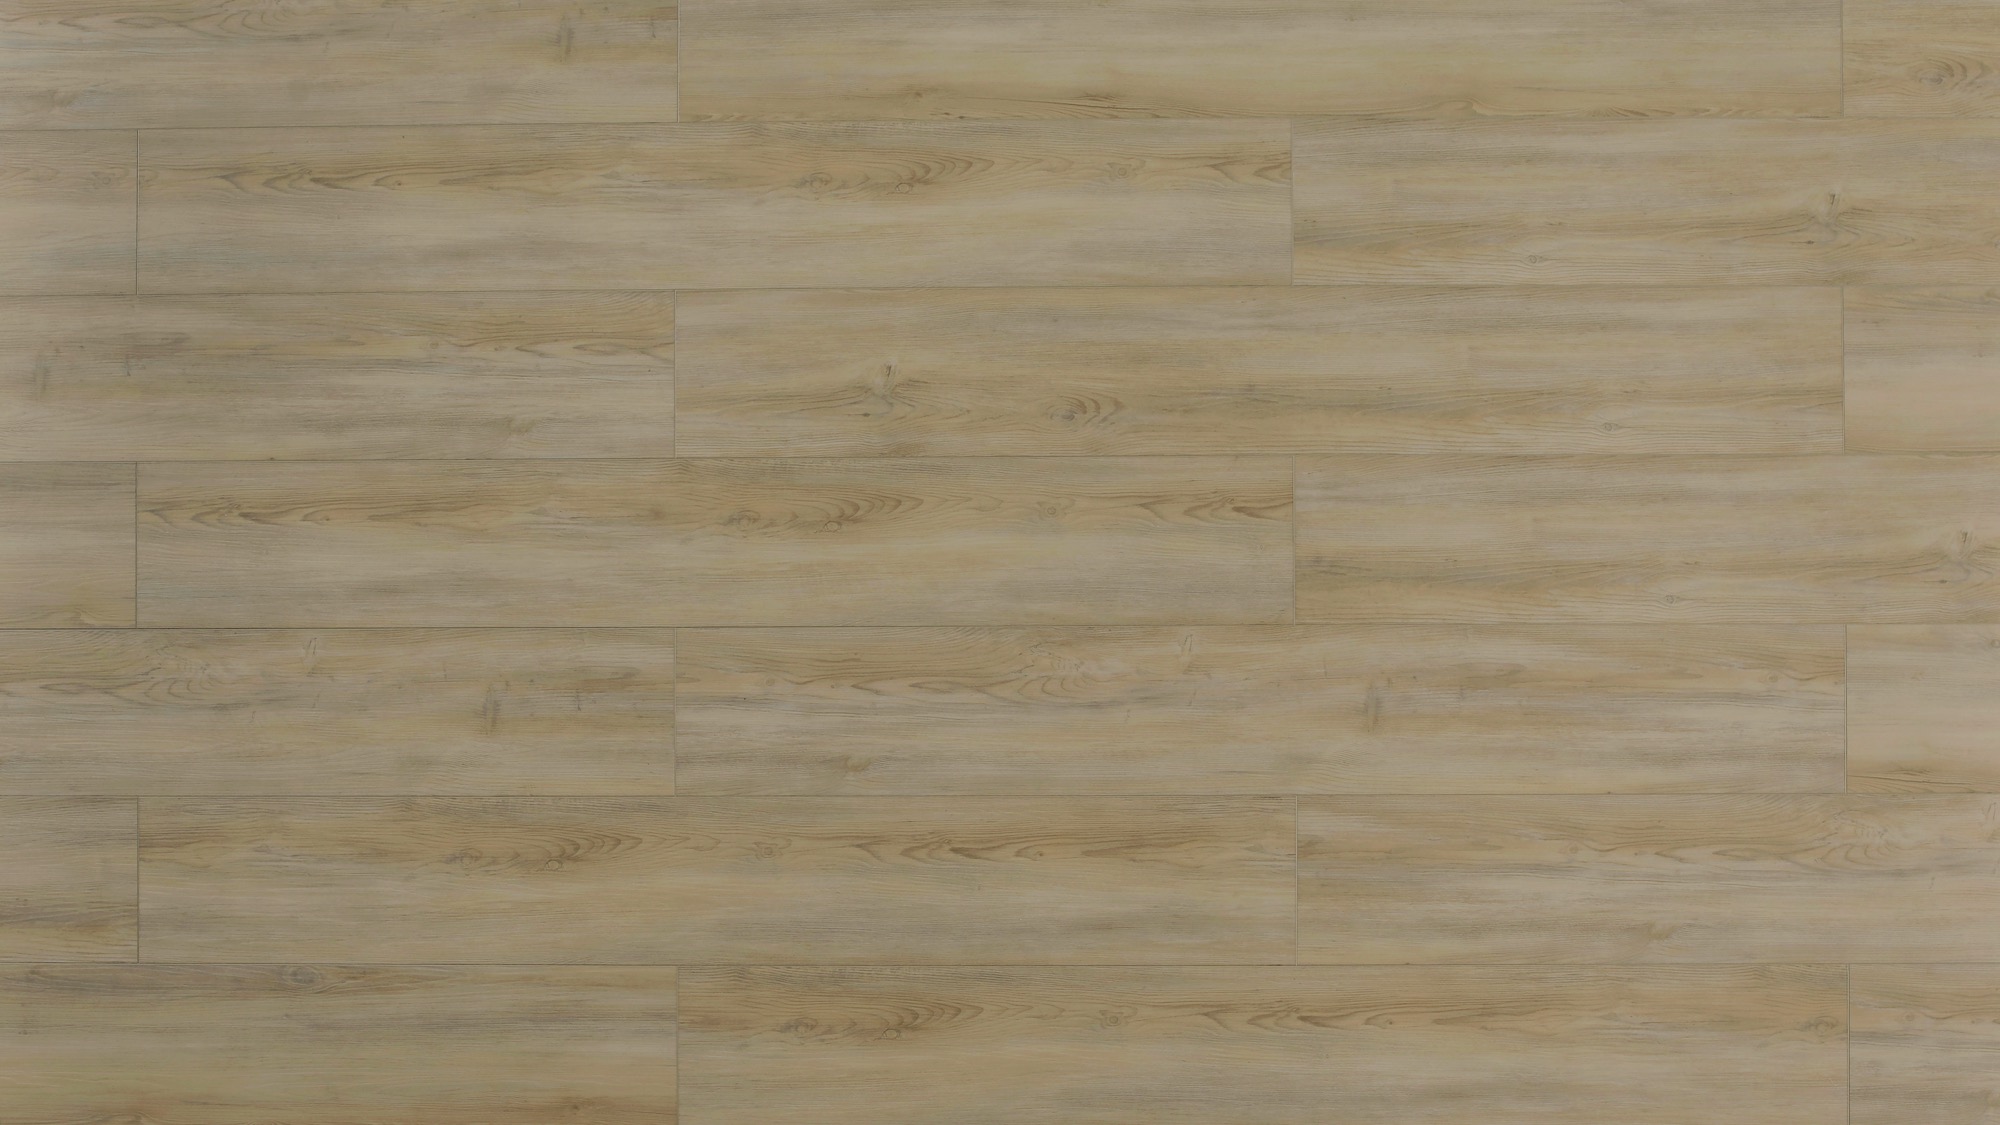 Toucan Flooring Embossed in Register Residential and Commercial Vinyl Flooring 7 MM